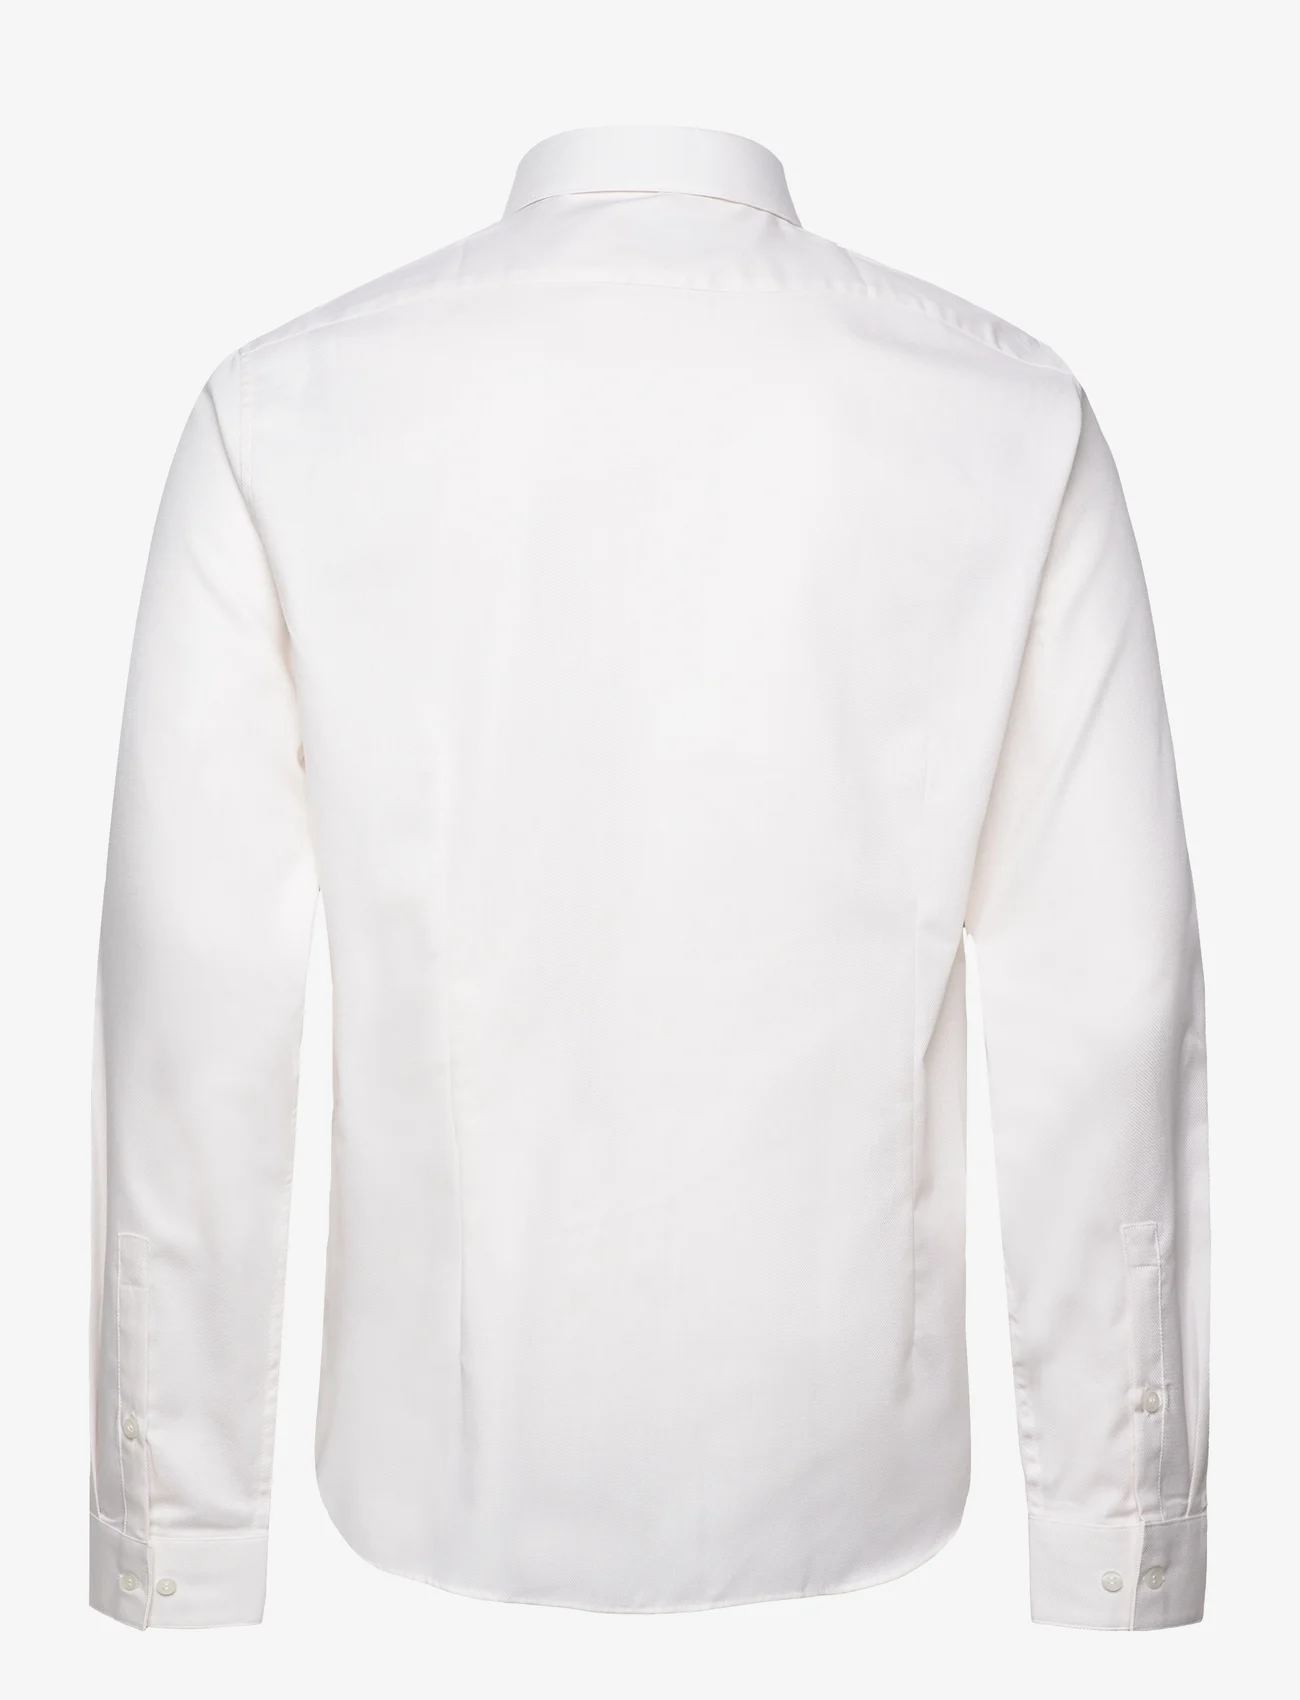 Calvin Klein - STRUCTURE SOLID SLIM SHIRT - basic shirts - white - 1